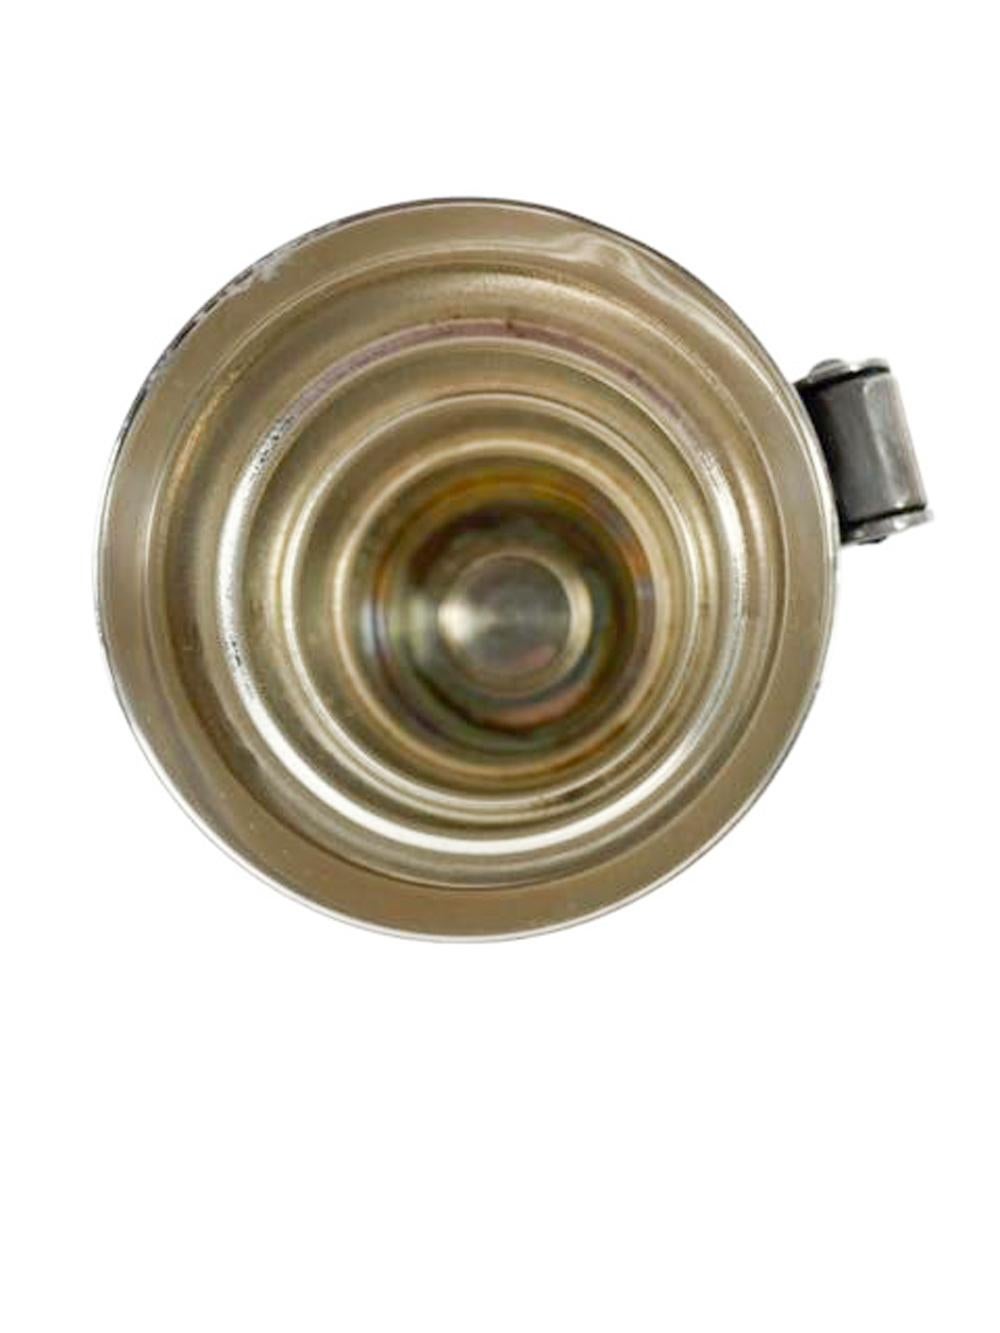 20th Century Art Deco Silver Plate Mechanical Spirit Measure / Jigger by Napier For Sale